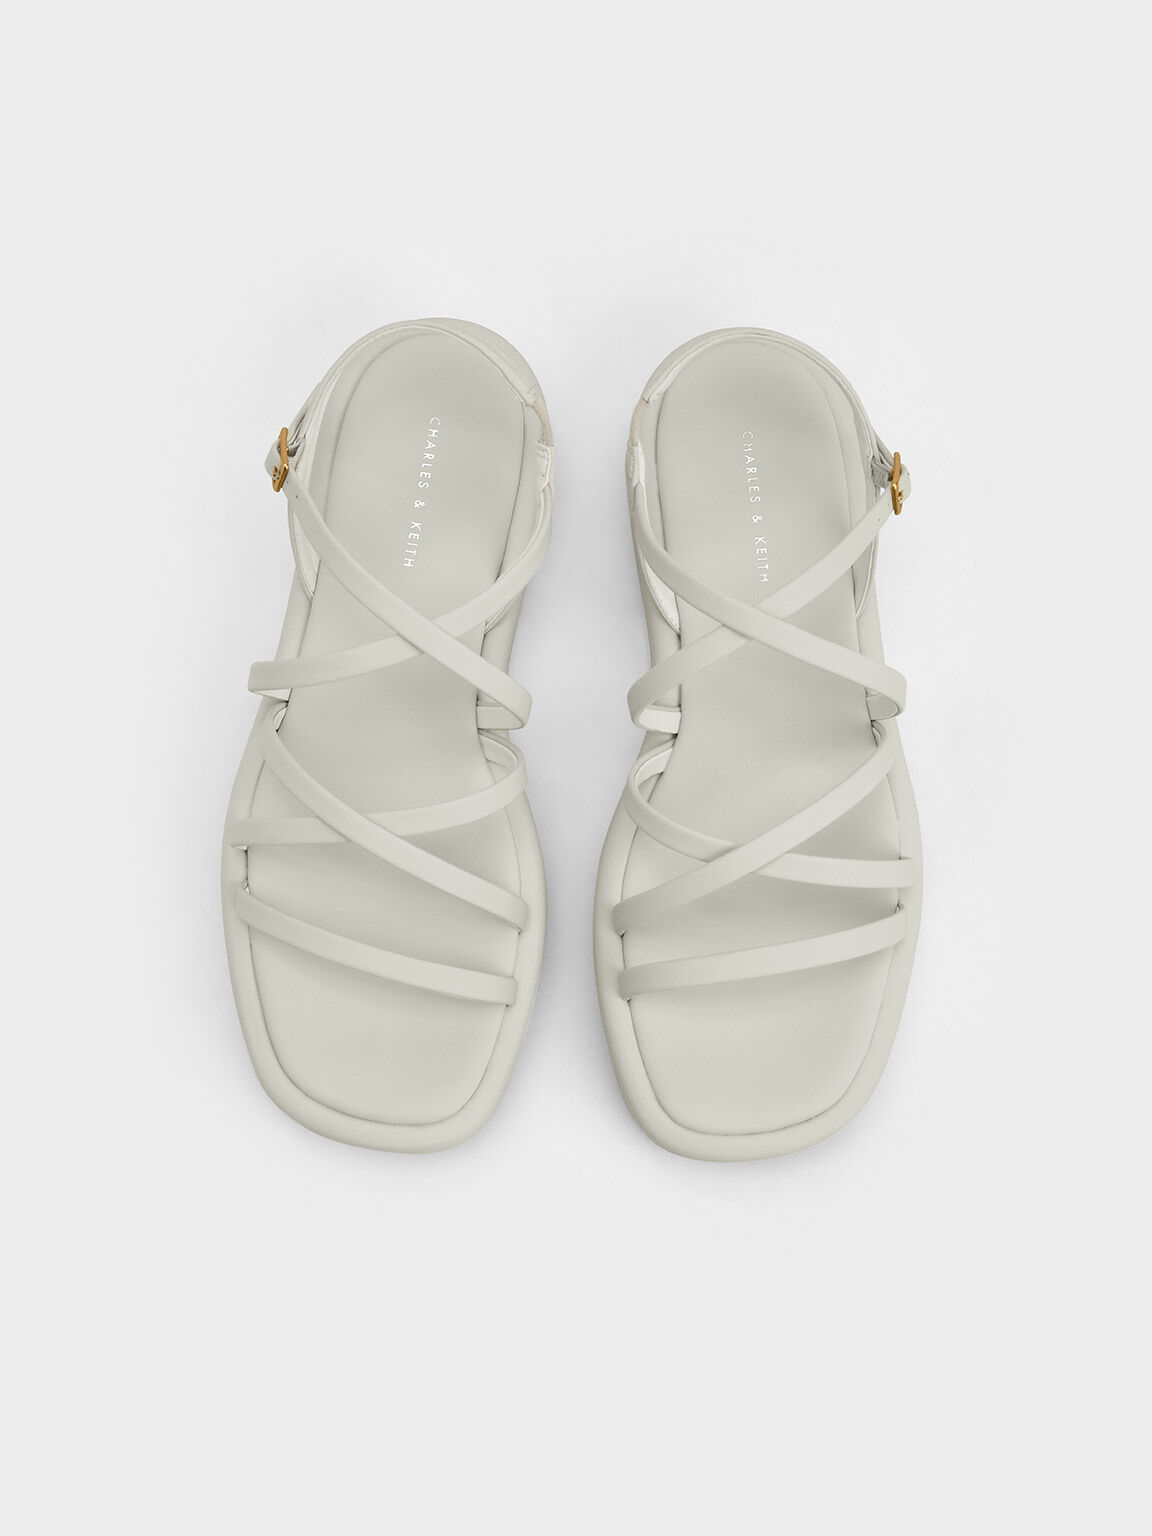 Sandal Flatform Strappy Padded, White, hi-res